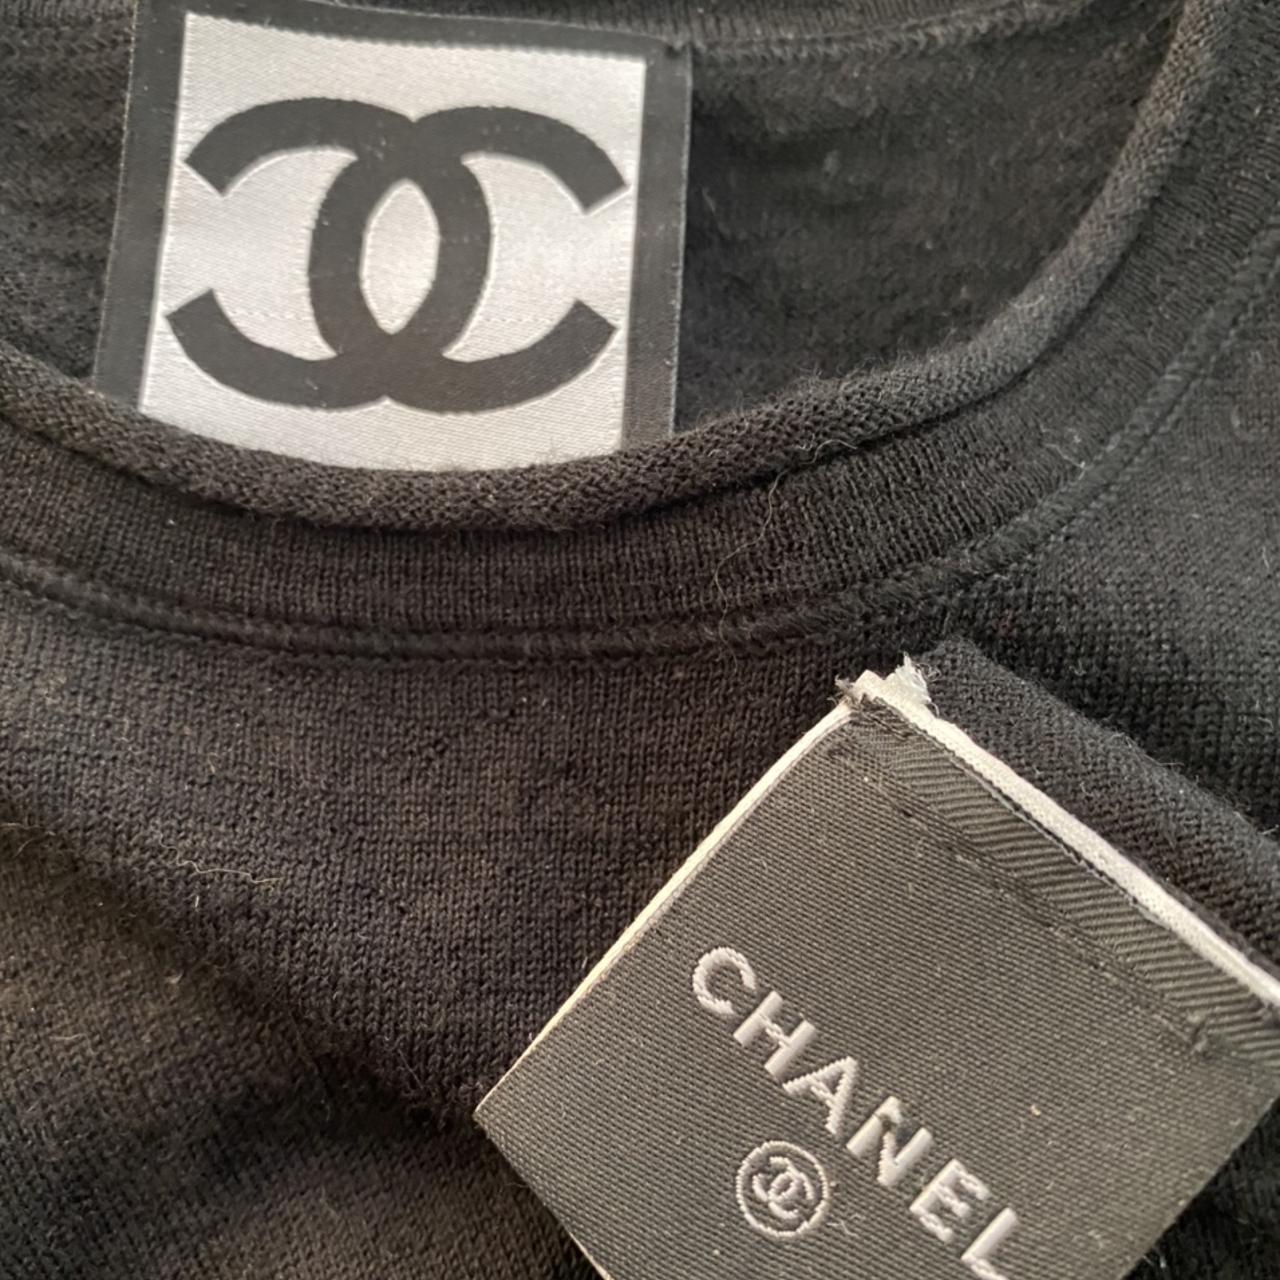 C H A N E L , Chanel Little Black T-shirt, New, never